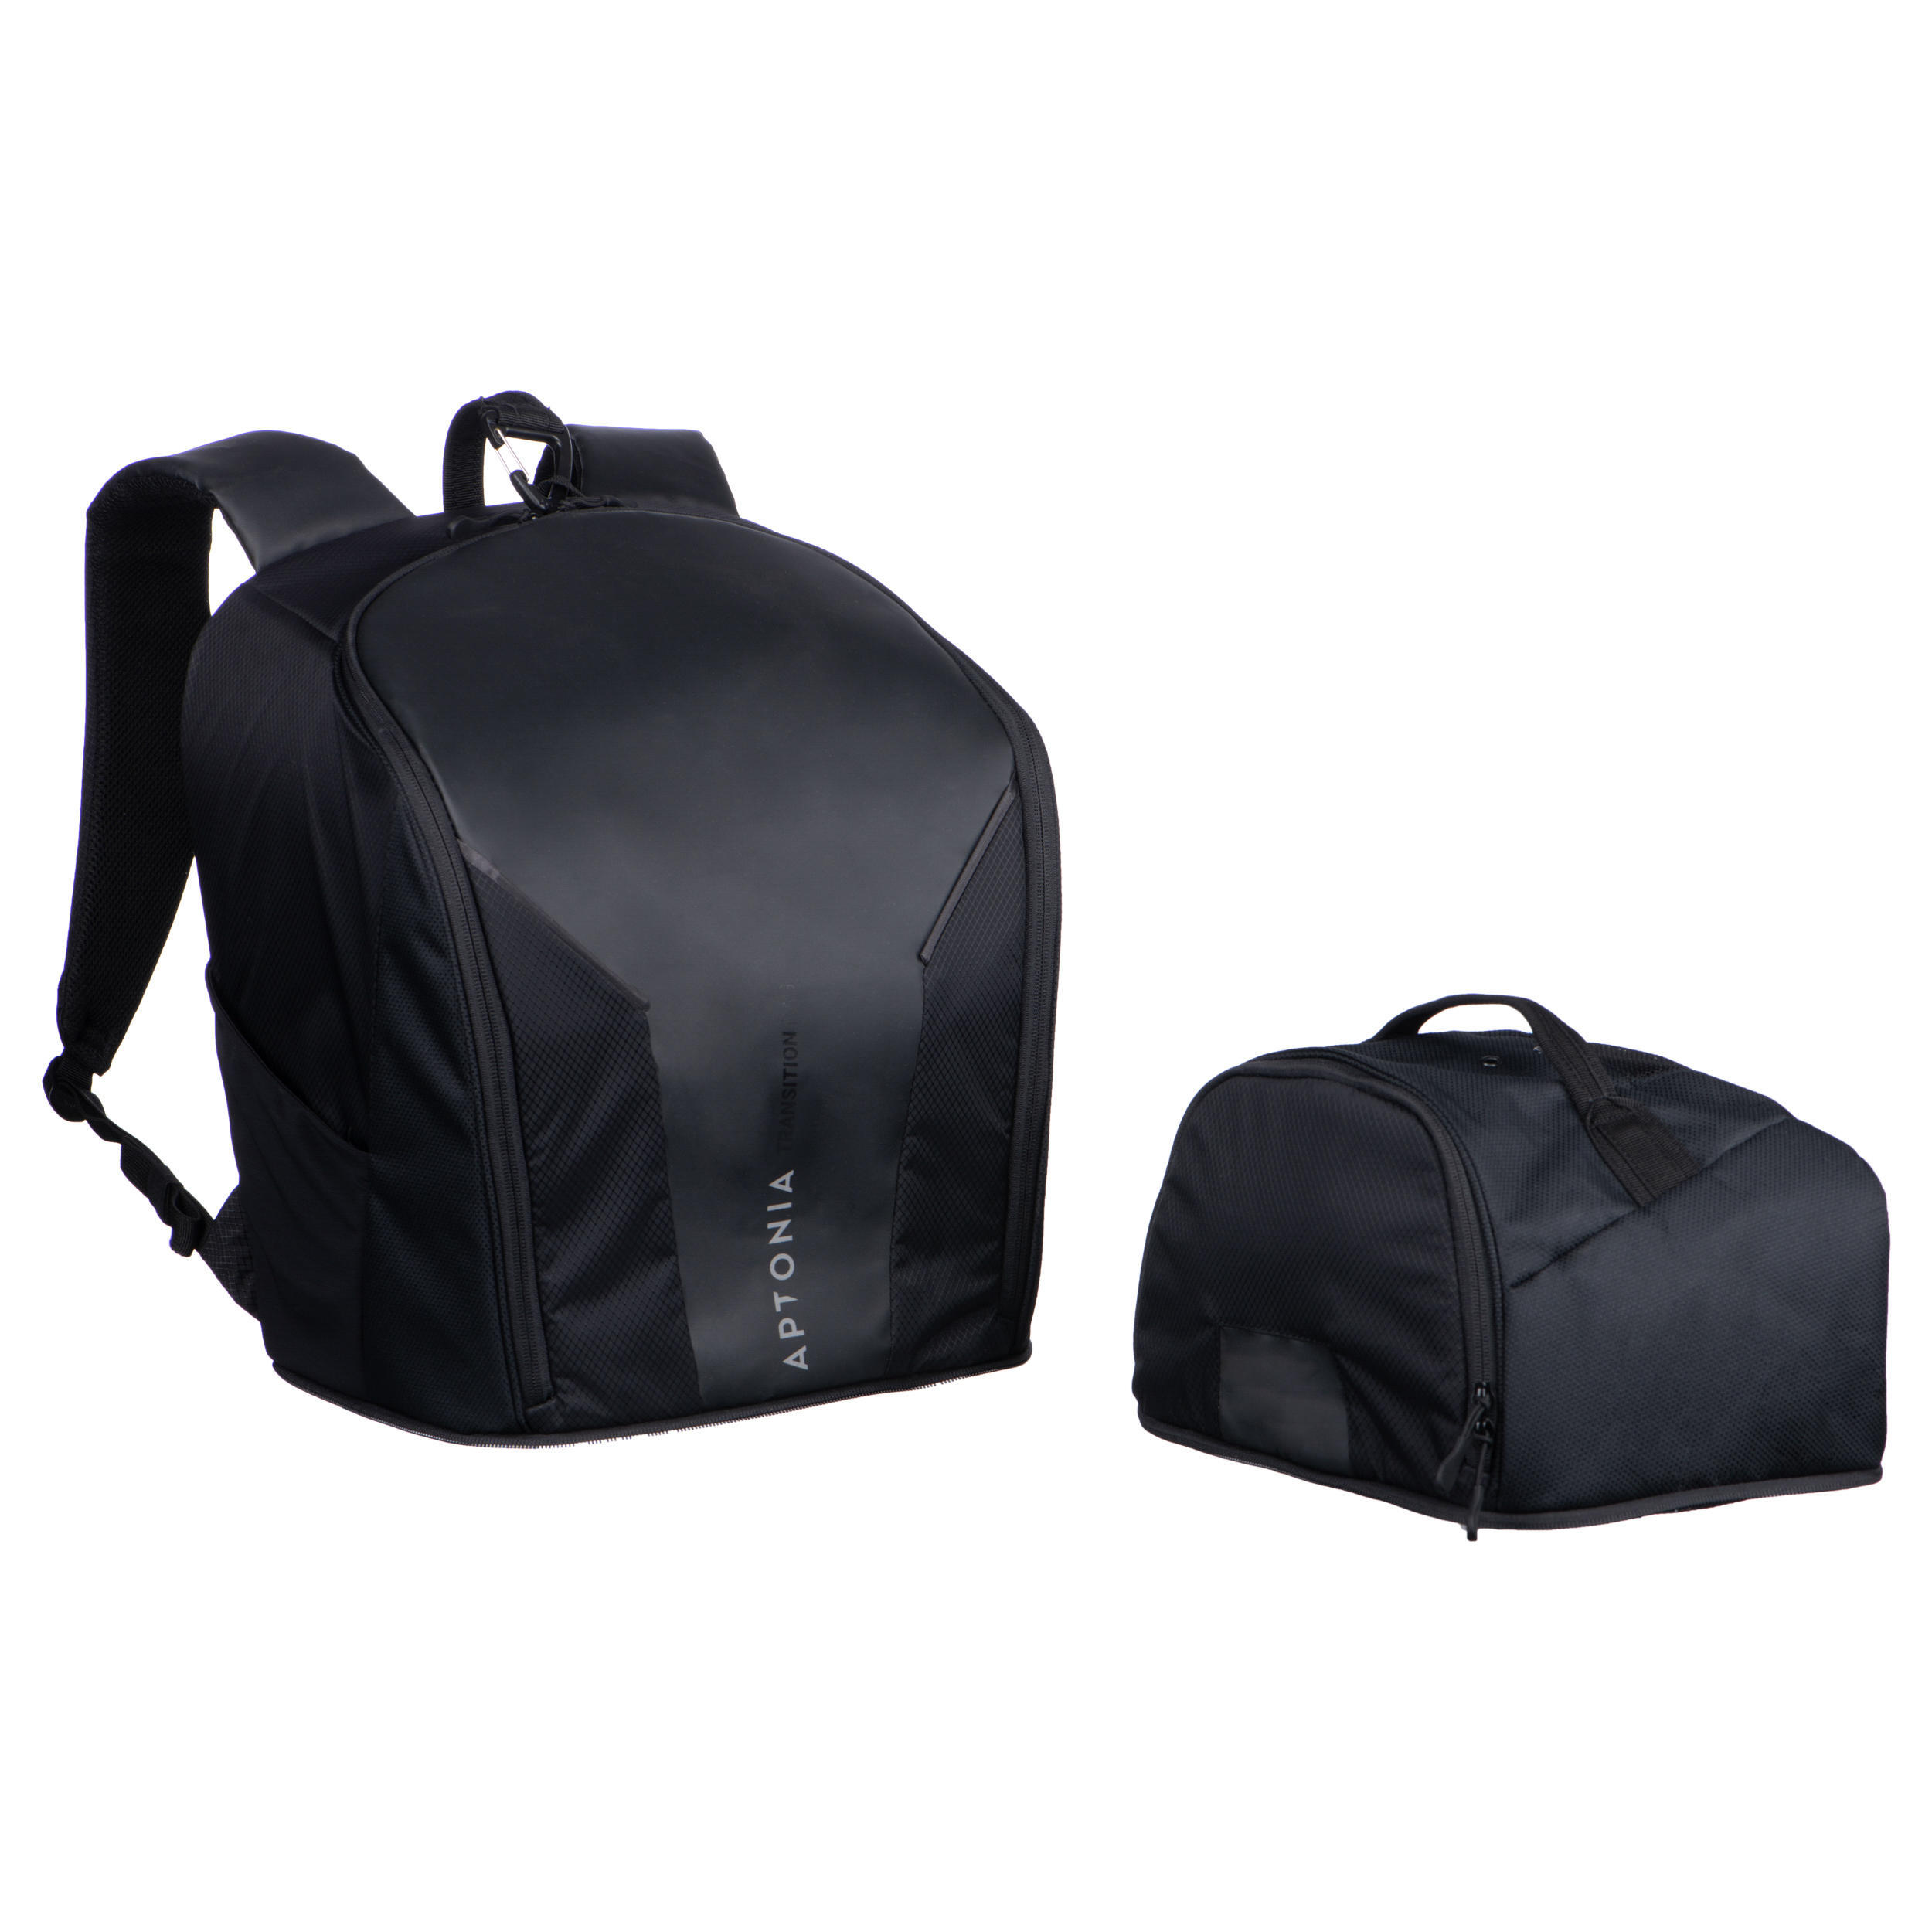 Aptonia Triathlon Transition Bag 35L - Black/Blue 4/10